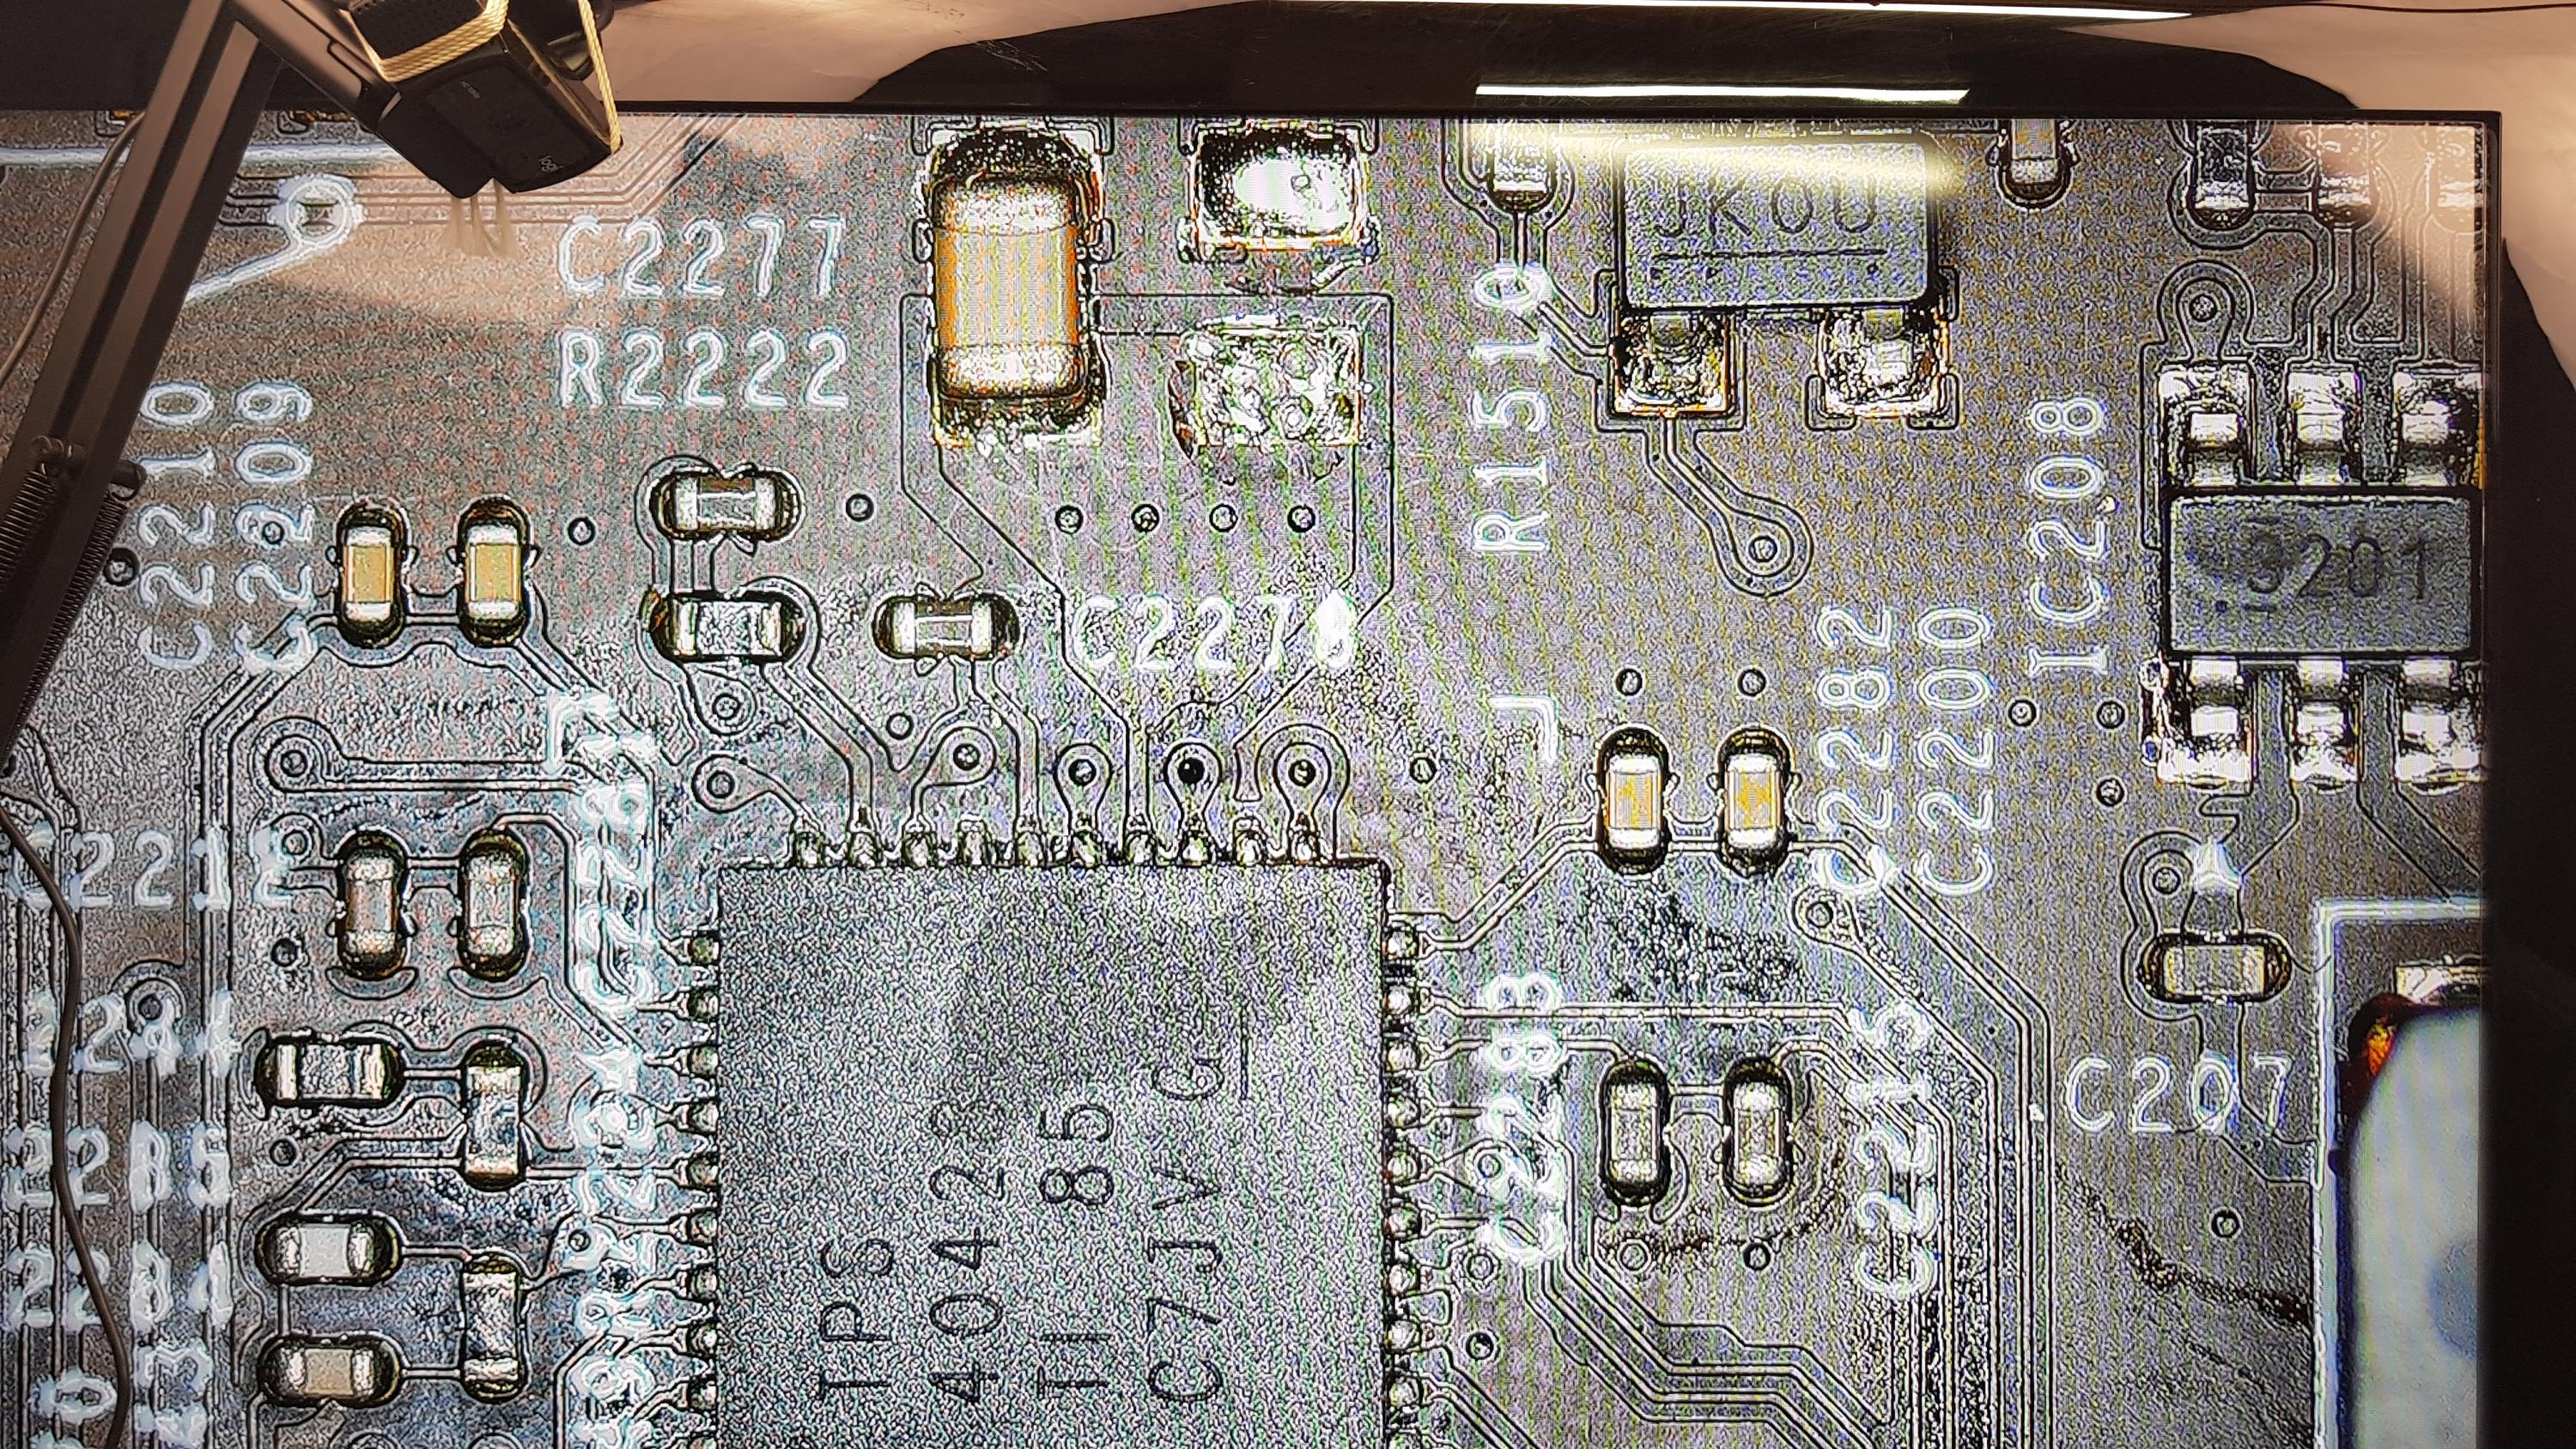 Samsung 65q900 main board bn41-02679b - Badcaps